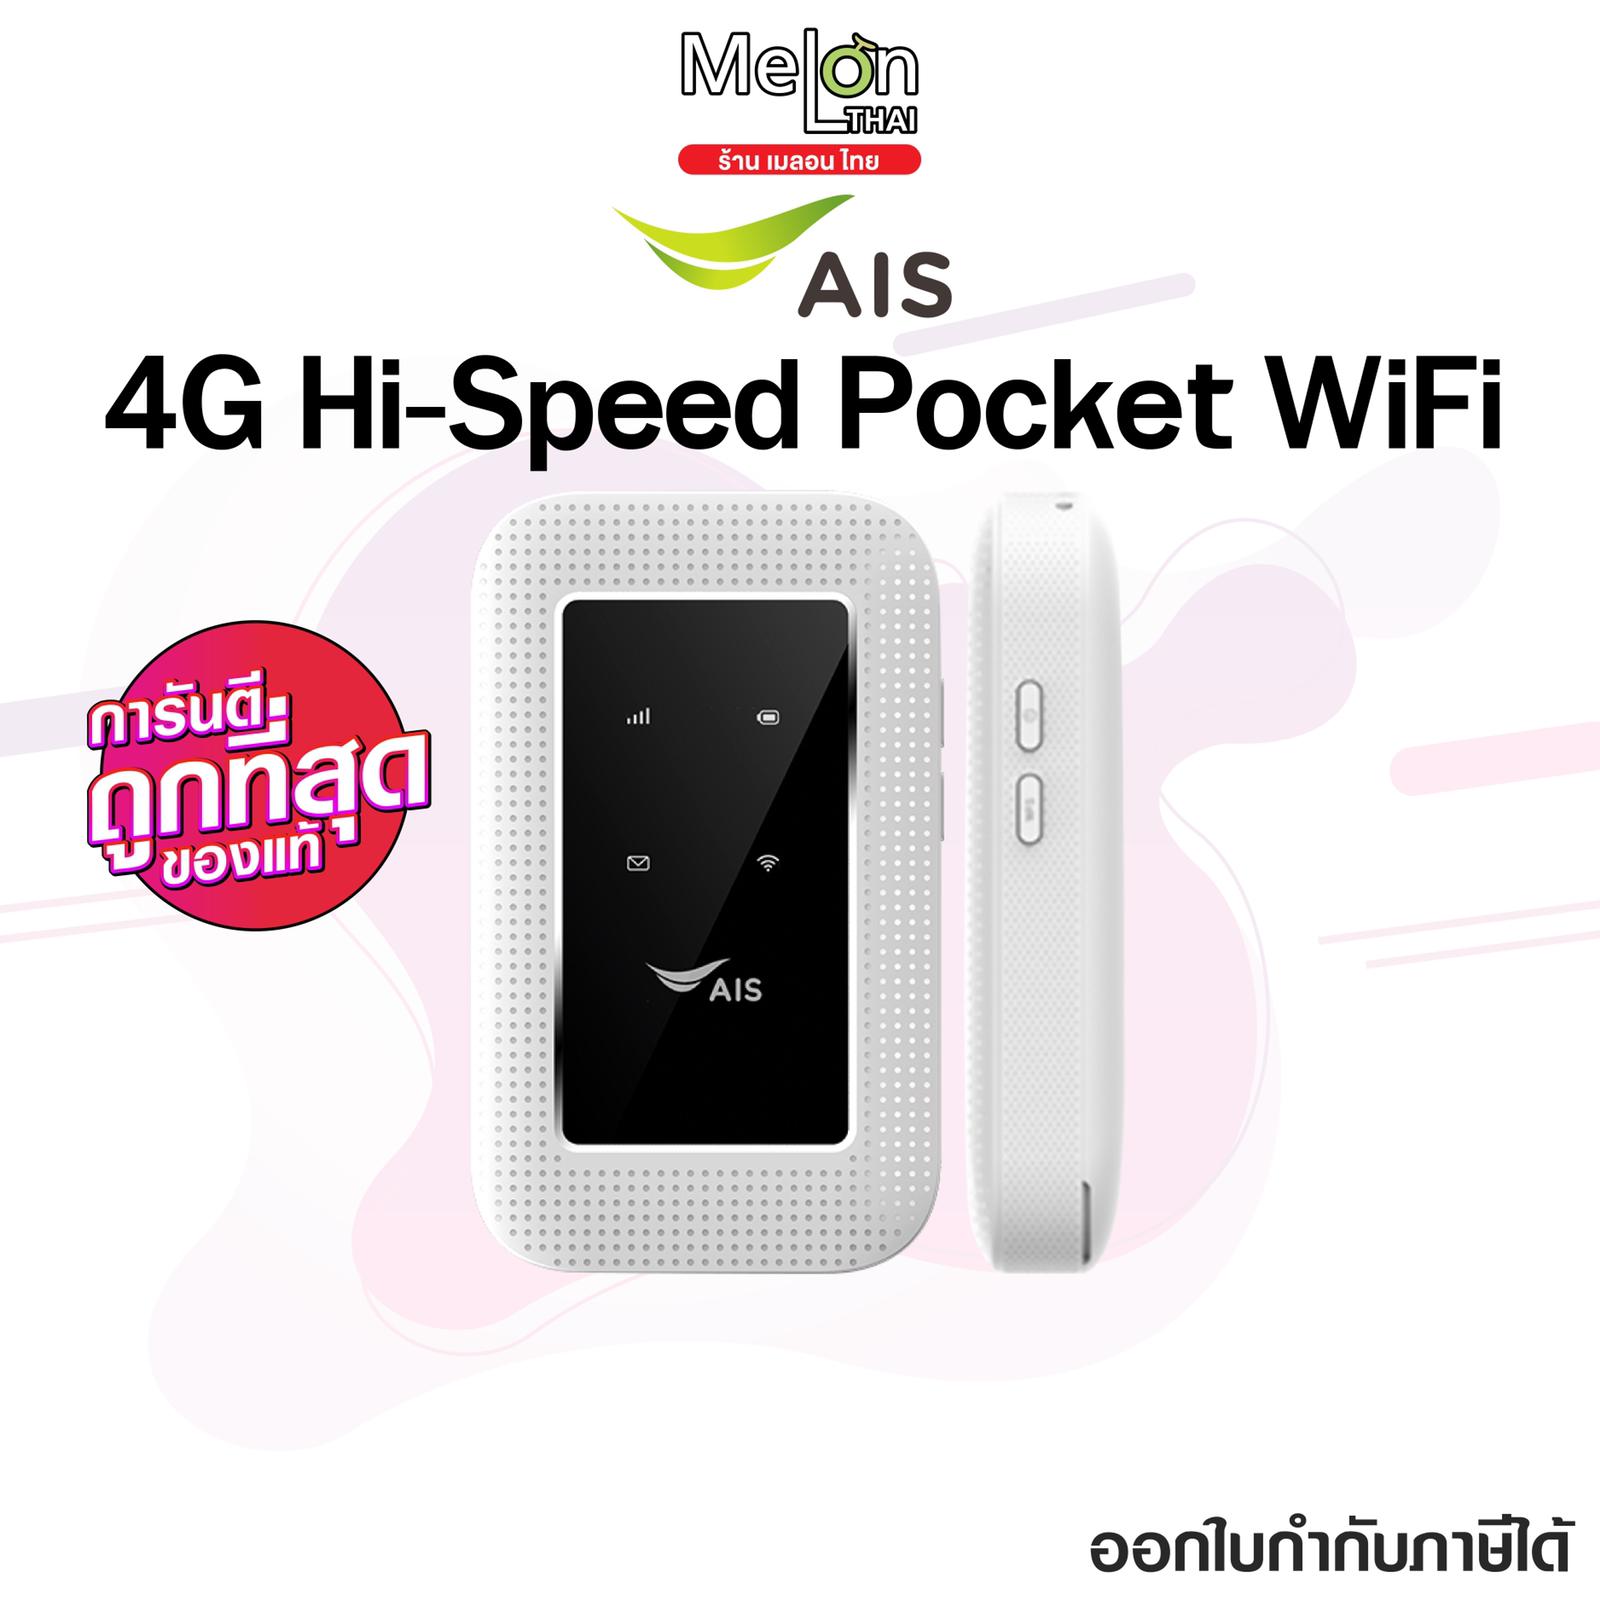 AIS 4G Hi-speed pocket wifi รุ่น RUIO Growfield D523 ใส่ซิมได้ทุกระบบ #ประกัน1 เดือน #ออกใบกำกับภาษีได้ ไวไฟพกพา รองรับทุกค่าย